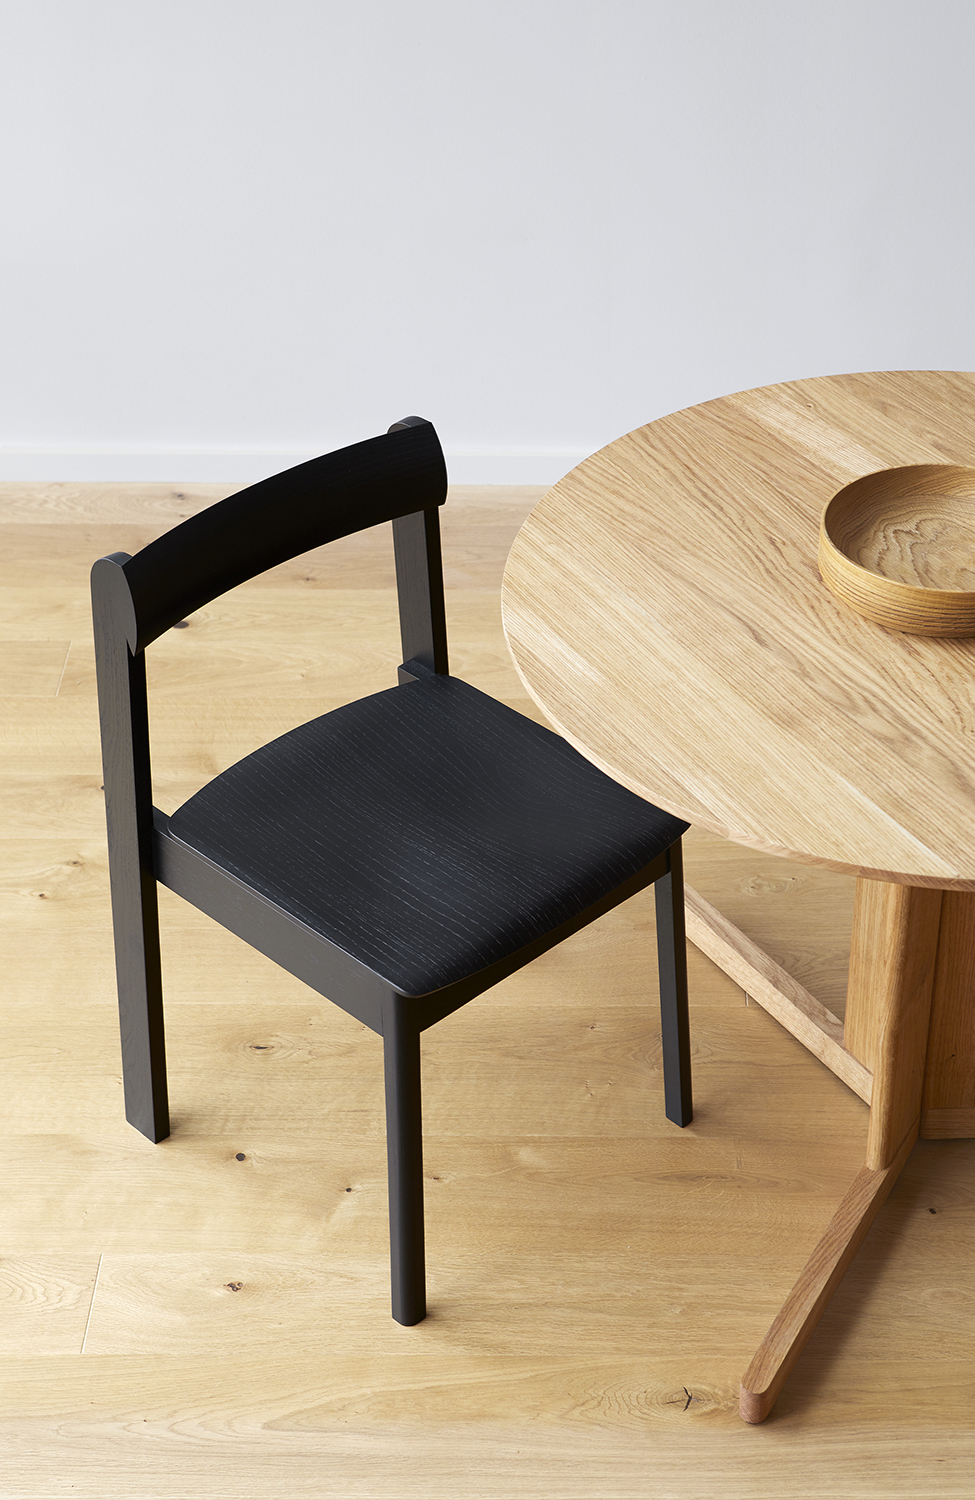 Form-and-Refine_Living_Blueprint-Chair-Black_Trefoil-Table